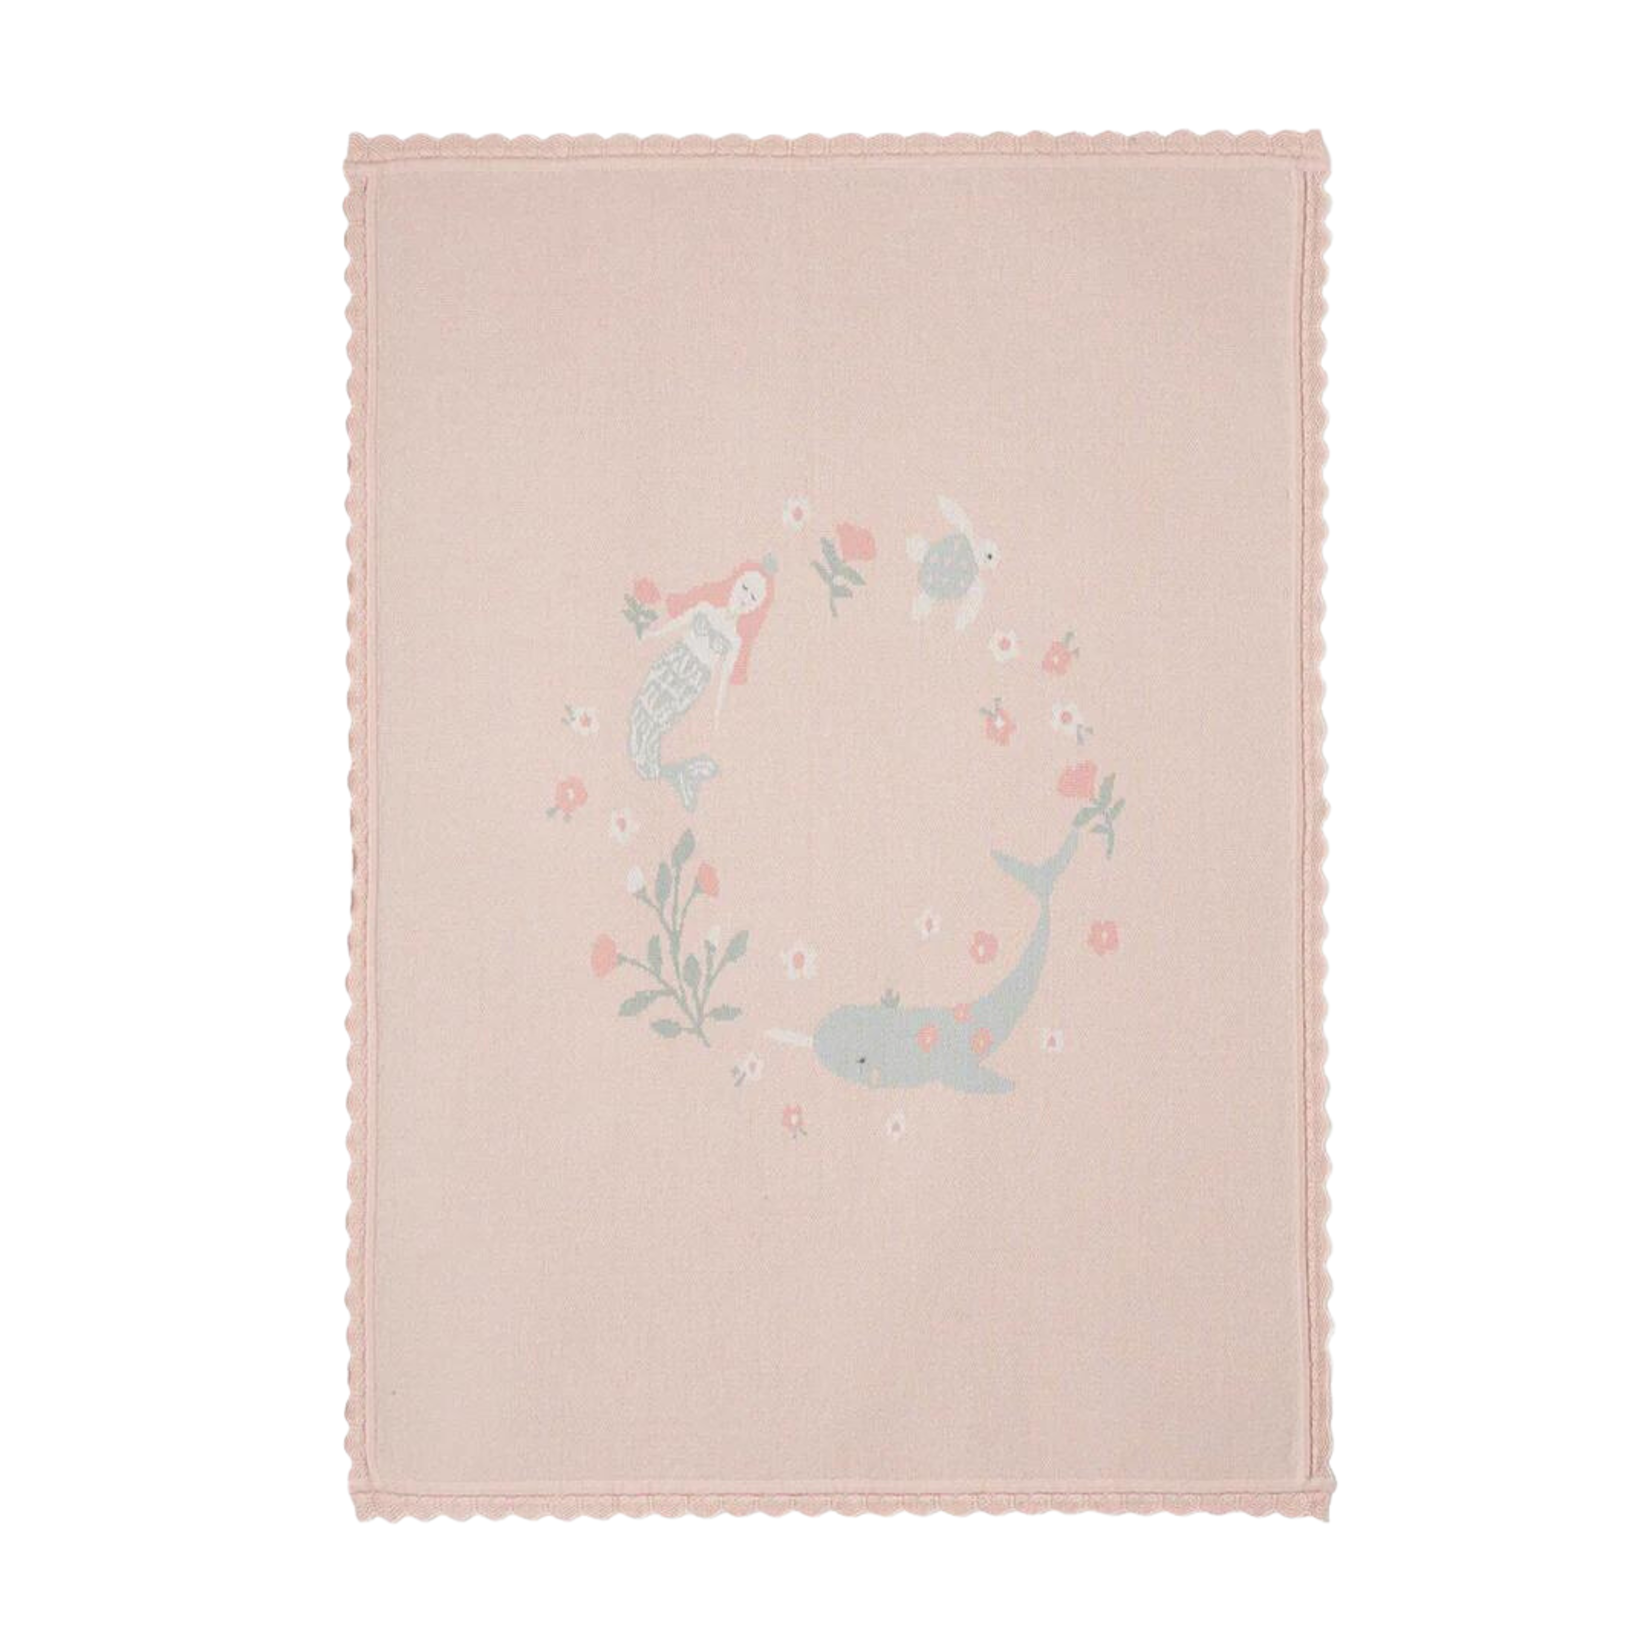 Elegant Baby Mermaid Sea Magic Cotton Knit Baby Blanket